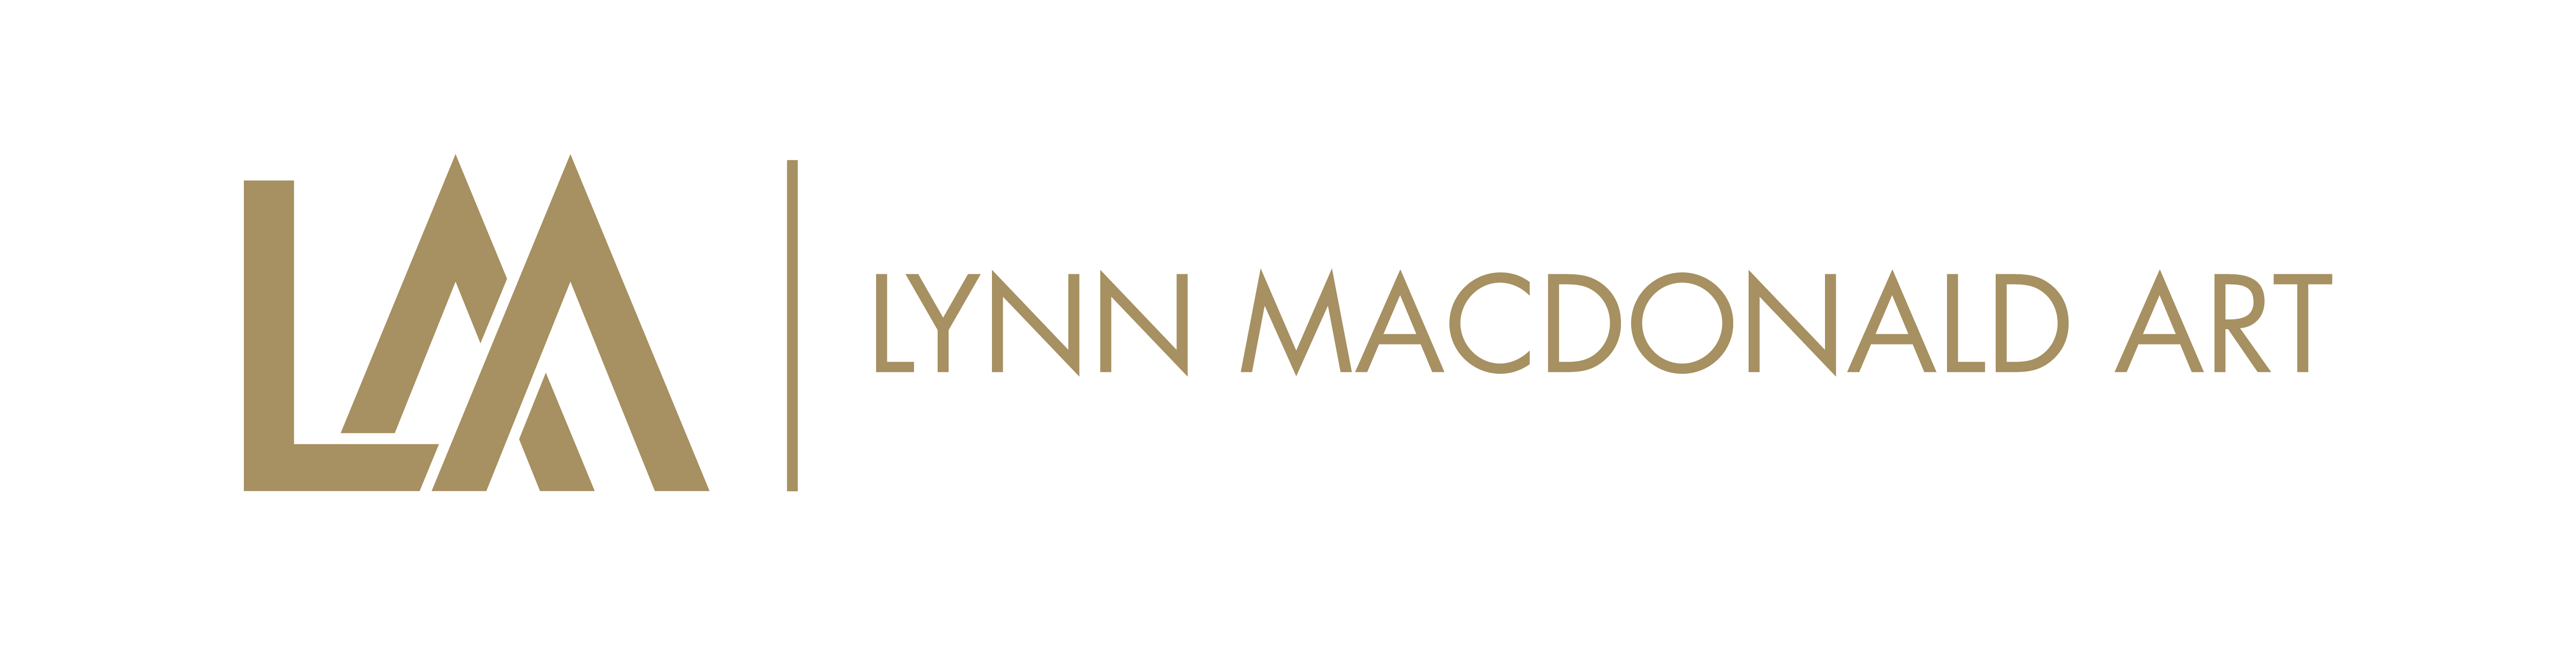 Lynn MacDonald